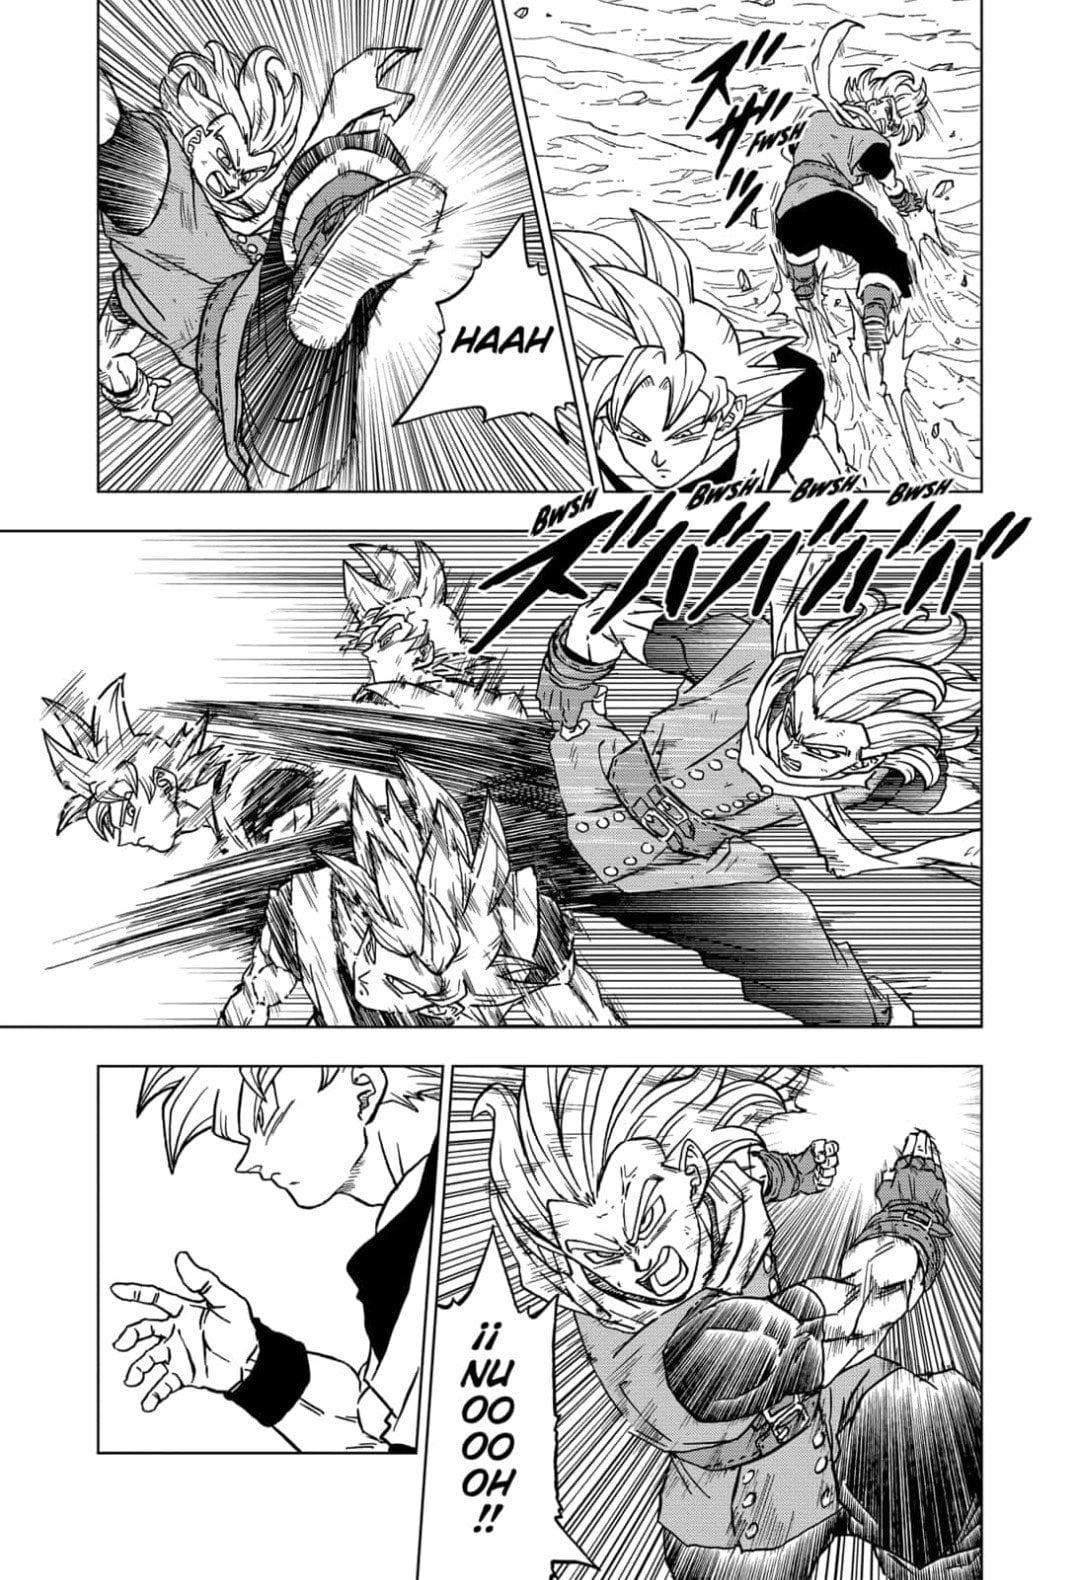 Gaul  Dragon Ball Land 悟 ---COMISSIONS OPEN--- on X: Página do manga 73  de DBS colorida por mim. @kamisamaexp Lineart feita por @KaiquiOAlien #goku  #dragonballz #dragonball #dragonballsuper #dragonballsupermanga #granolah  #saiyajin #supersaiyanblue #